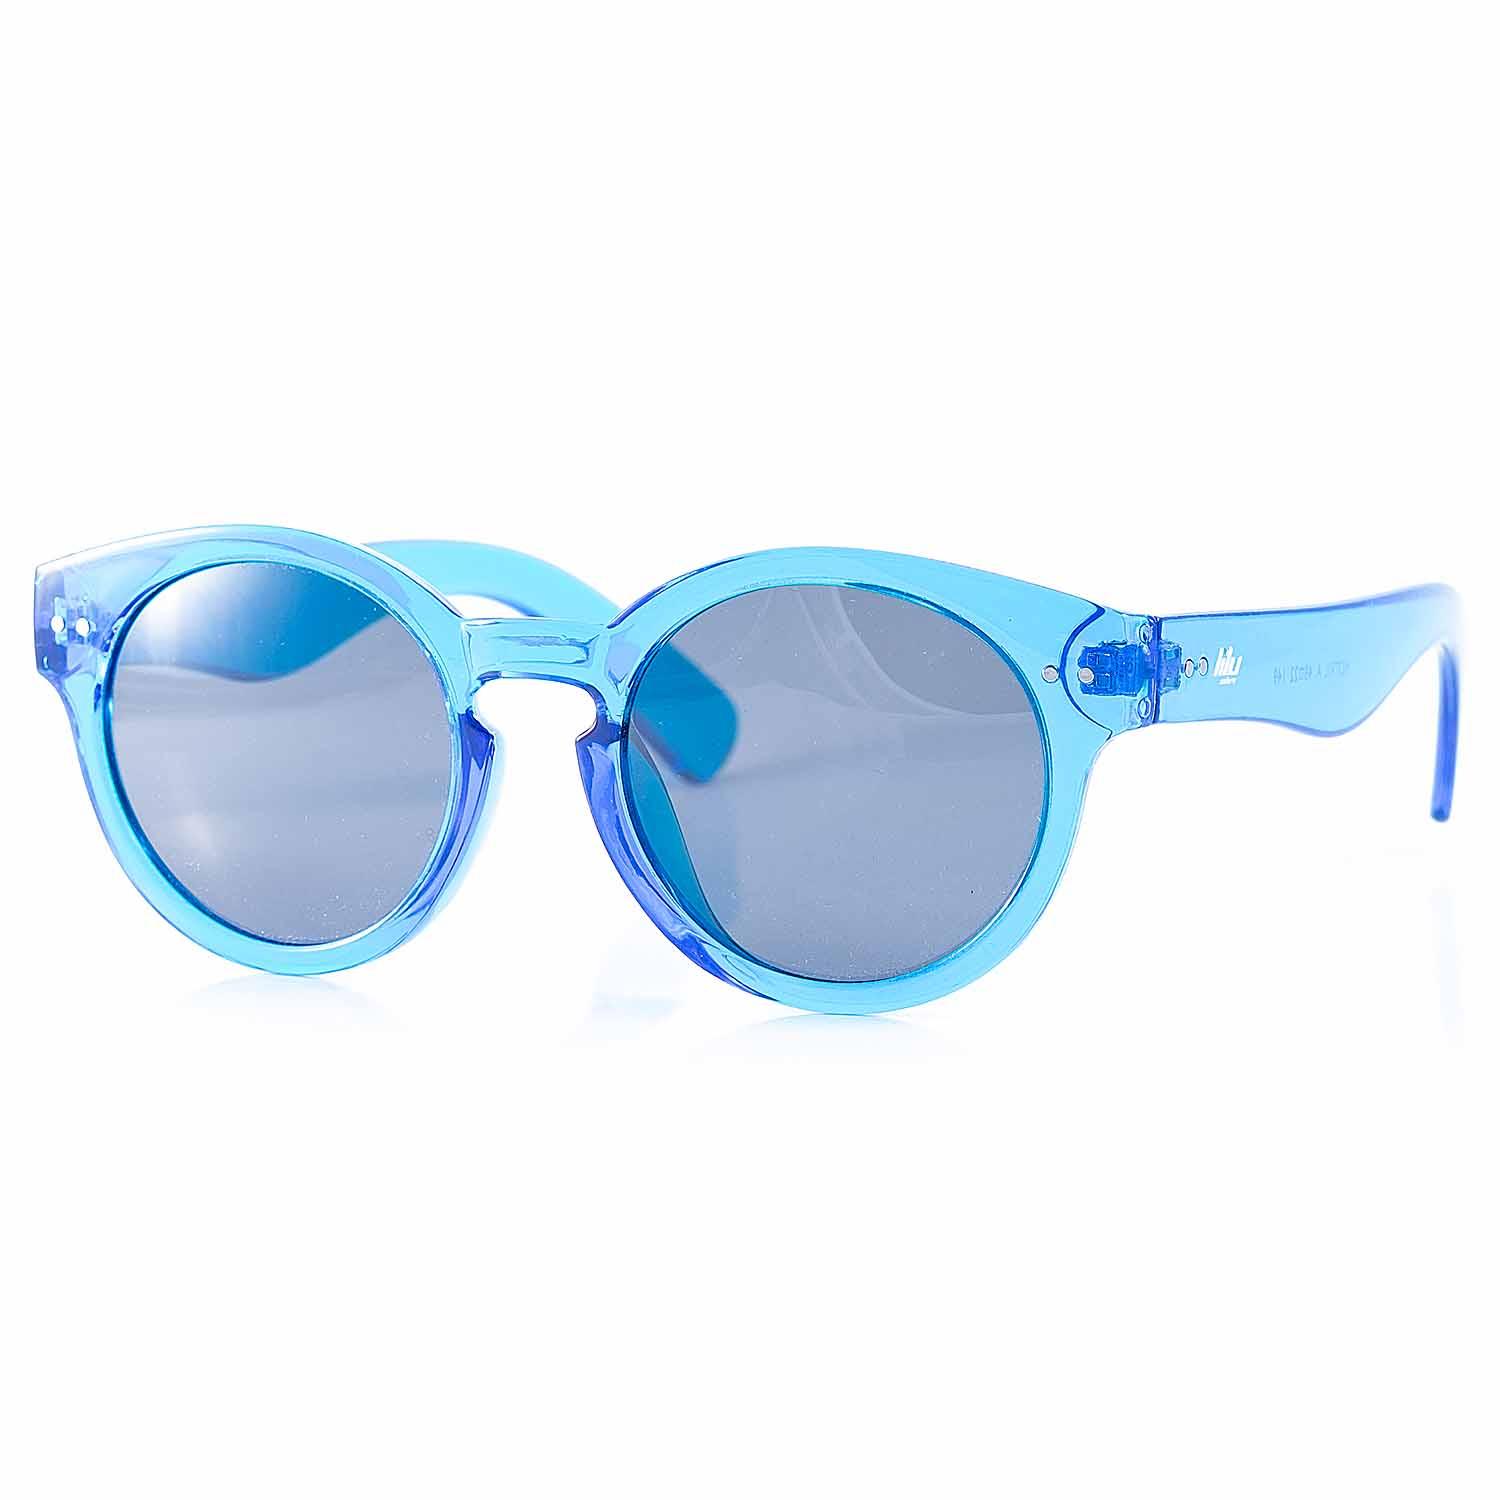 Gafas de sol polarizadas Motril color azul cristal